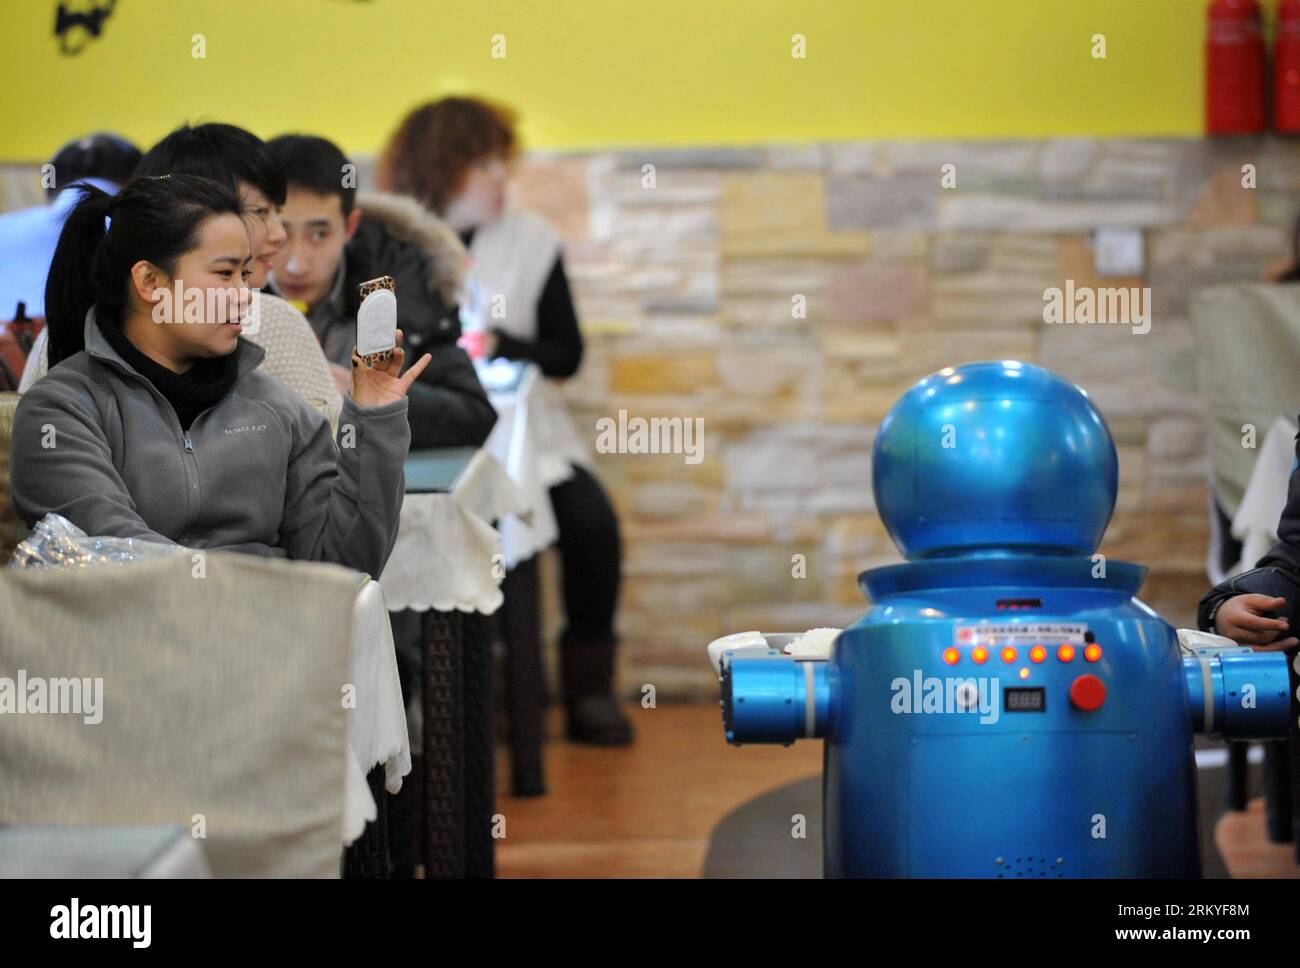 Bildnummer: 59214292  Datum: 13.02.2013  Copyright: imago/Xinhua (130213) -- HARBIN, Feb. 13, 2013 (Xinhua) -- A consumer takes a photo of a robot waiter in a restaurant in Harbin, capital of northeast China s Heilongjiang Province, Feb. 13, 2013. The restaurant, offering service by 20 robots, started operating on Wednesday, attracting many consumers. (Xinhua/Wang Jianwei) (hdt) CHINA-HARBIN-RESTAURANT-ROBOT (CN) PUBLICATIONxNOTxINxCHN Gesellschaft Gastronomie Erlebnisgastronomie kurio Komik Roboter Kellner Fotostory premiumd x0x xac 2013 quer      59214292 Date 13 02 2013 Copyright Imago XINH Stock Photo